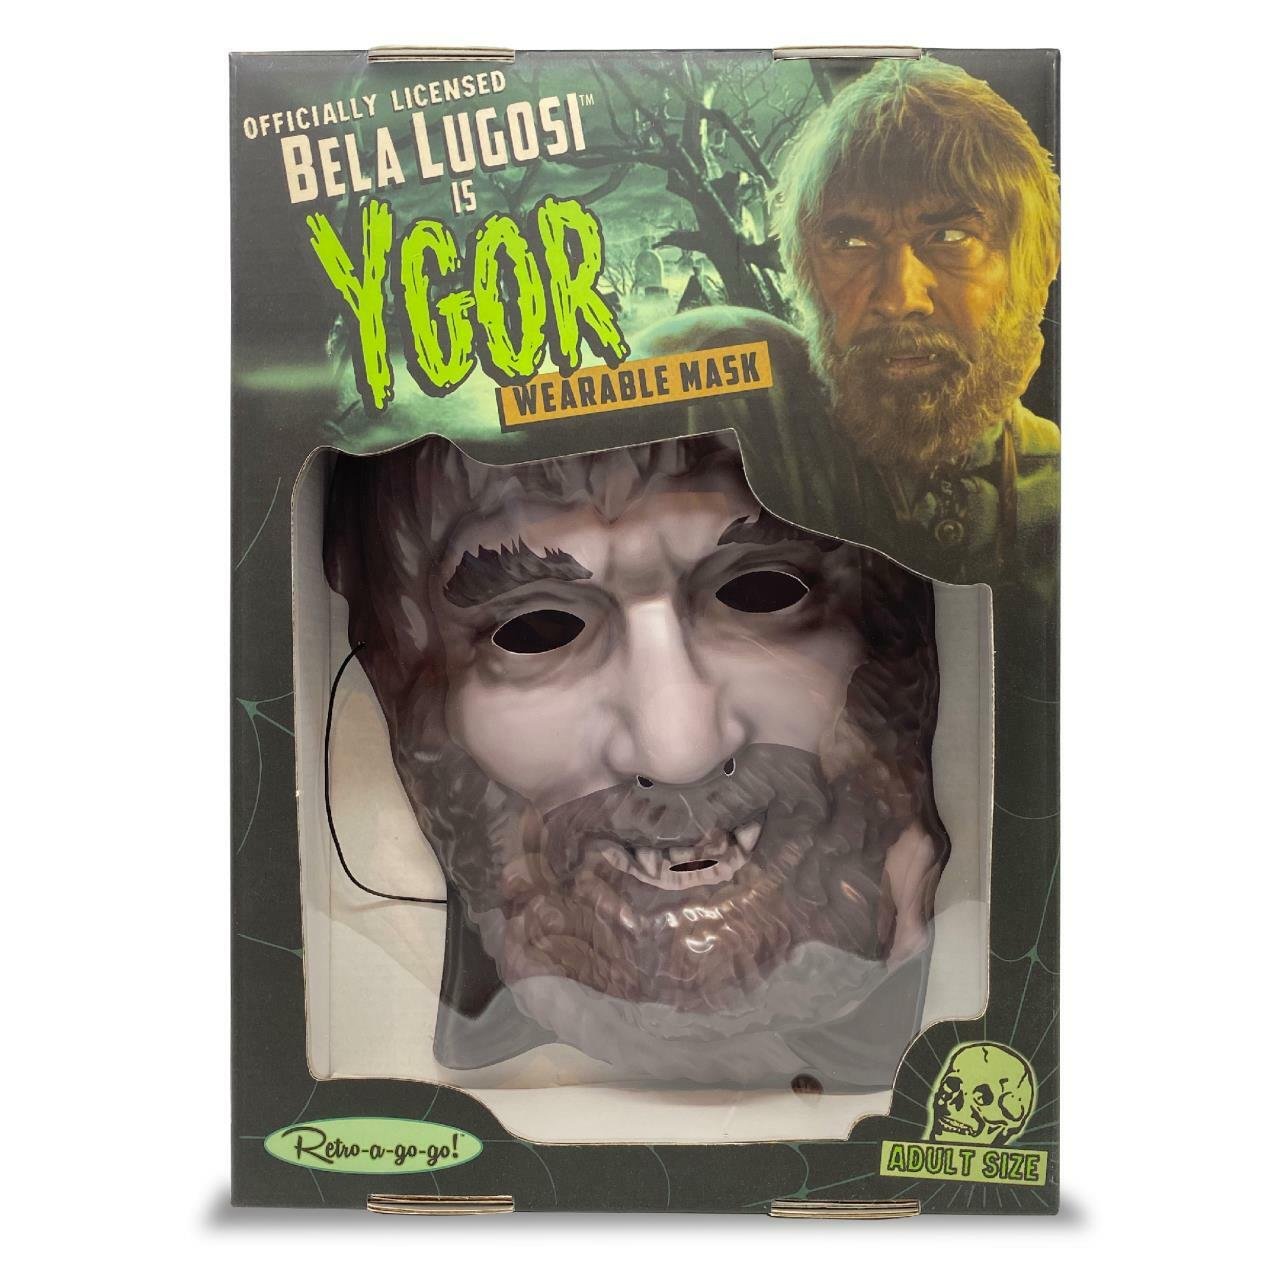 Retro-a-go-go! - Bela Lugosi is Ygor Wearable Mask - Midnight Movie